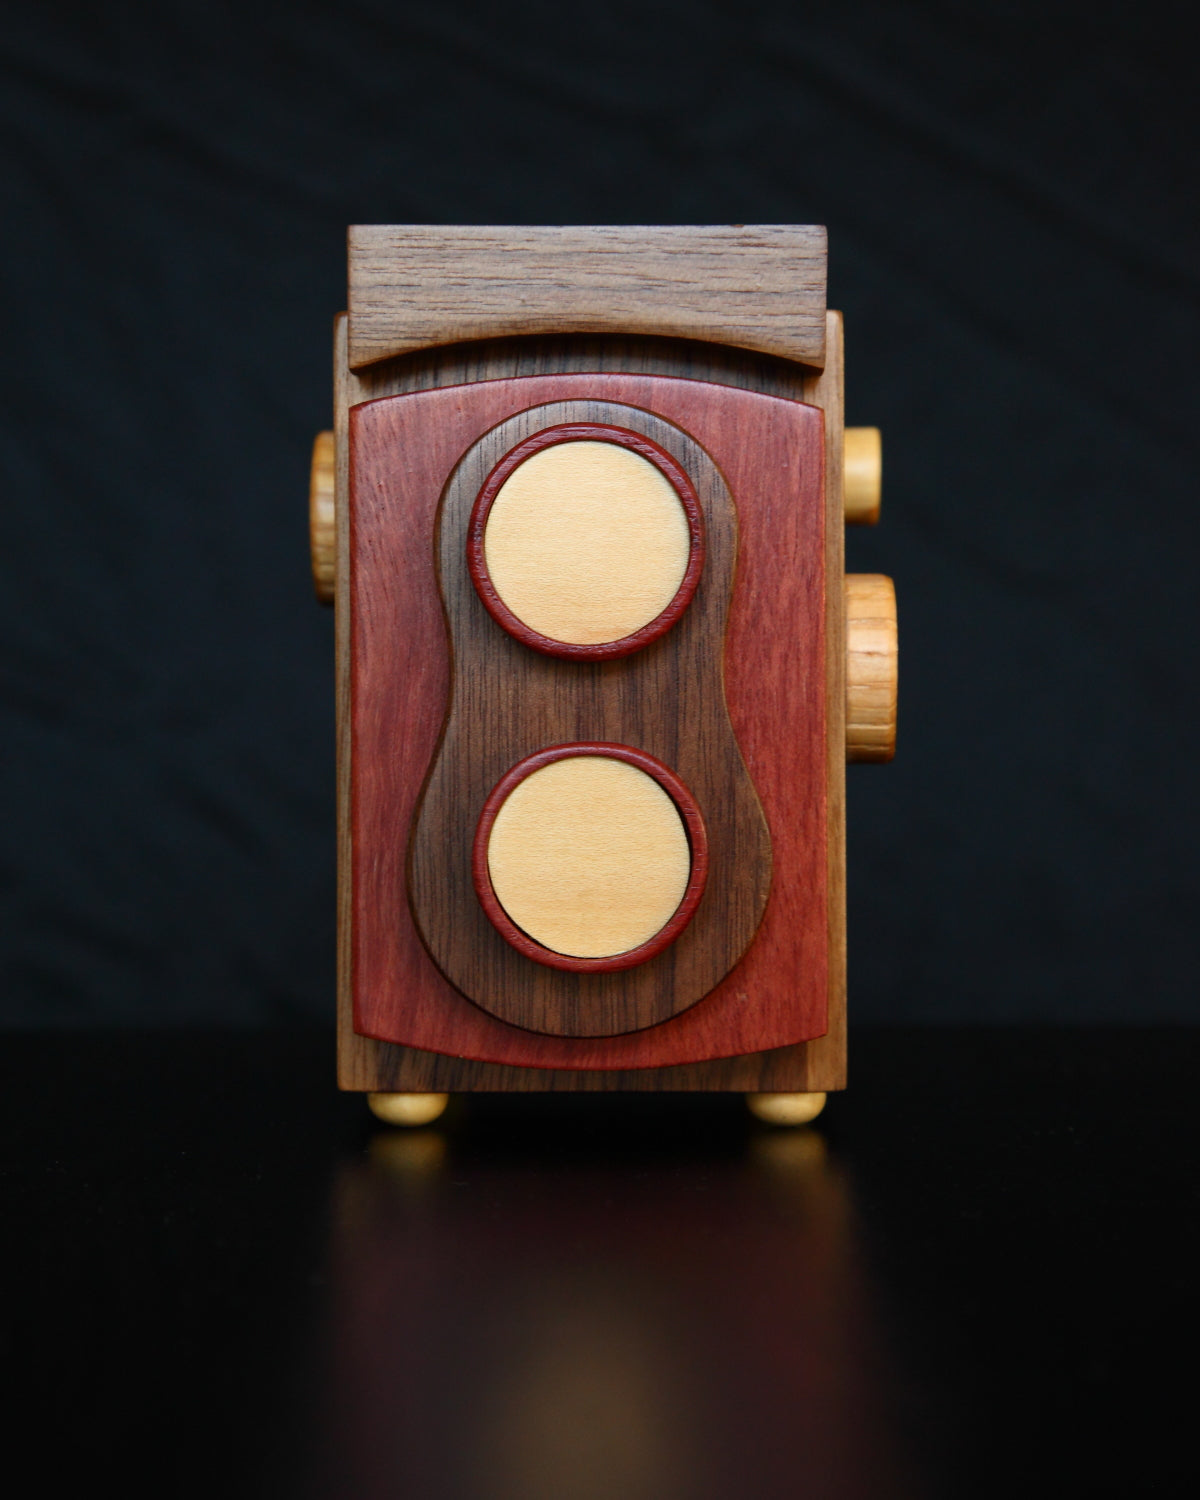 The Twin Lens Reflex Wood Camera